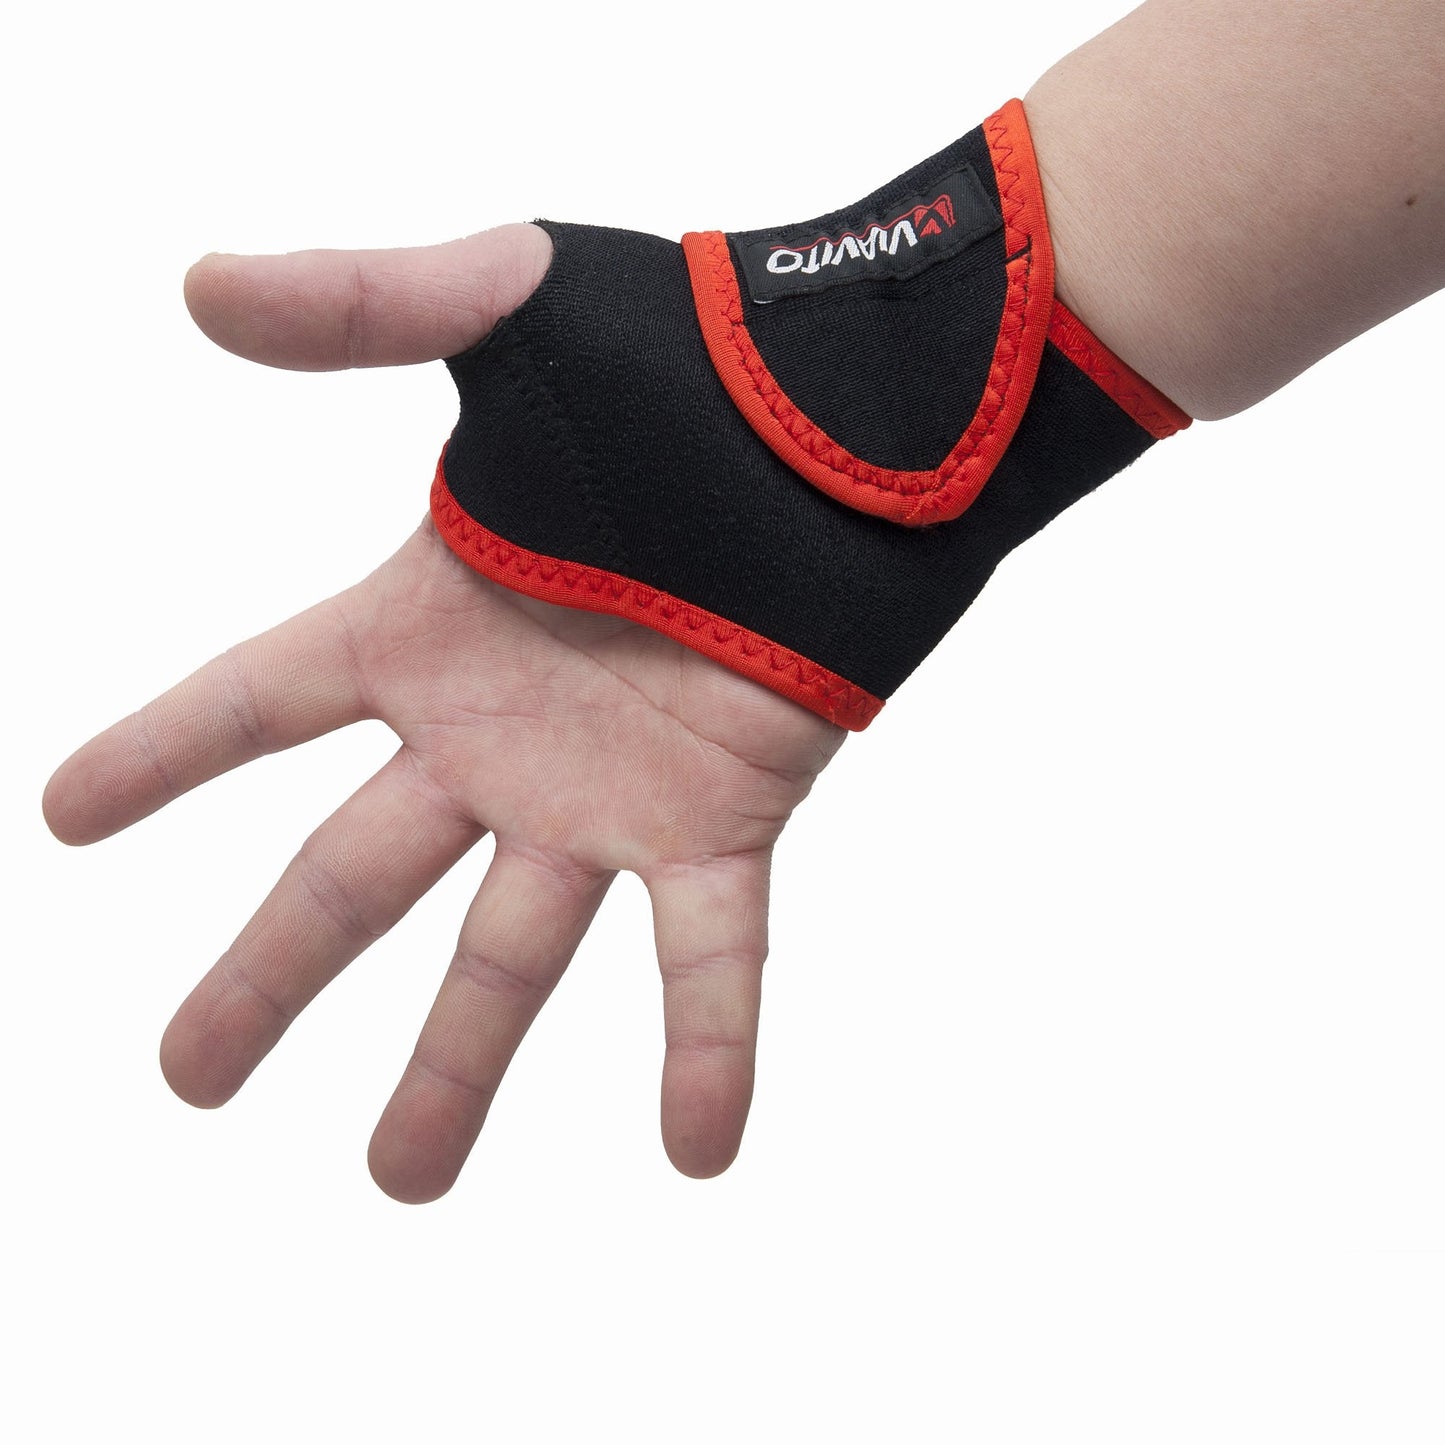 |Viavito Neoprene Wrist Support - Inside|